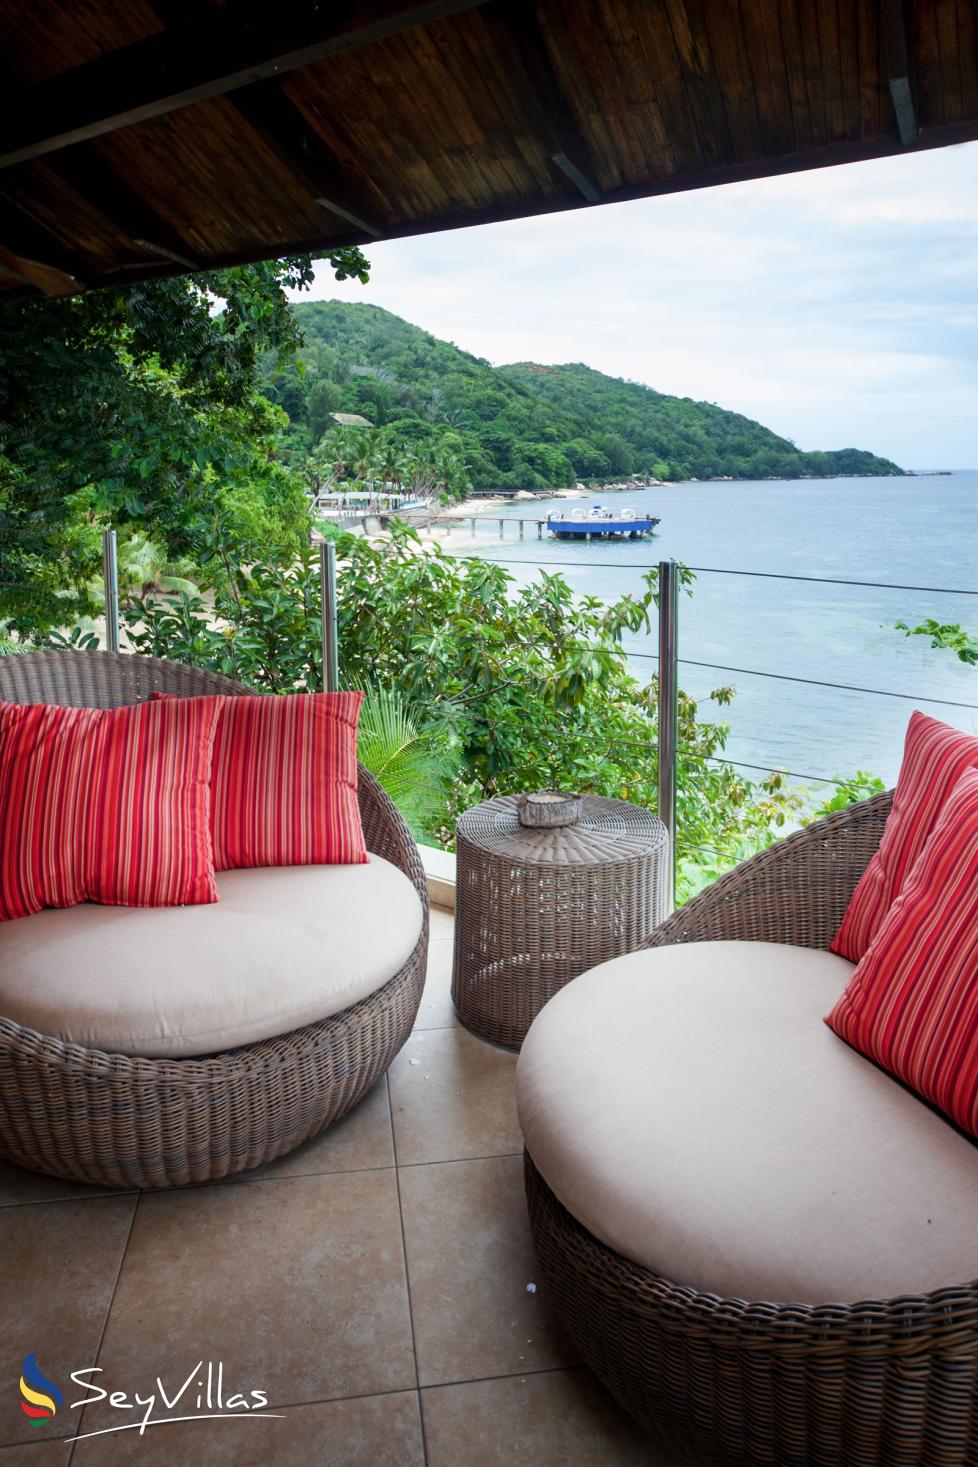 Photo 55: Coco de Mer & Black Parrot Suites - Standard - Praslin (Seychelles)